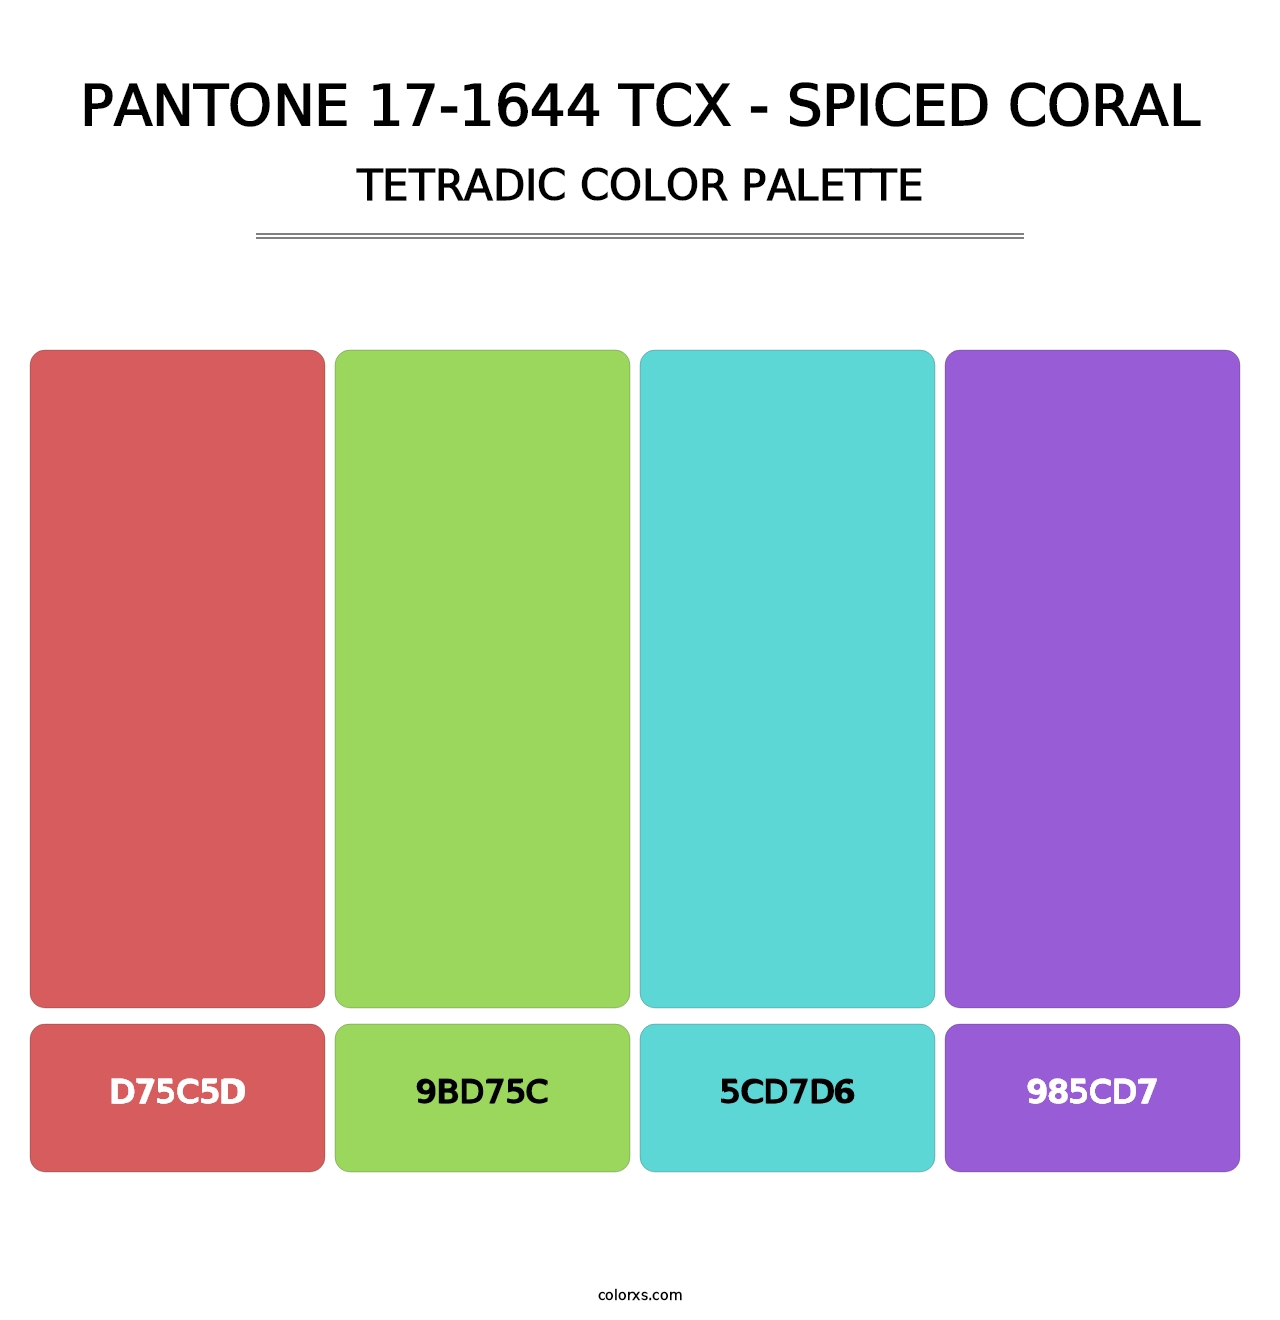 PANTONE 17-1644 TCX - Spiced Coral - Tetradic Color Palette